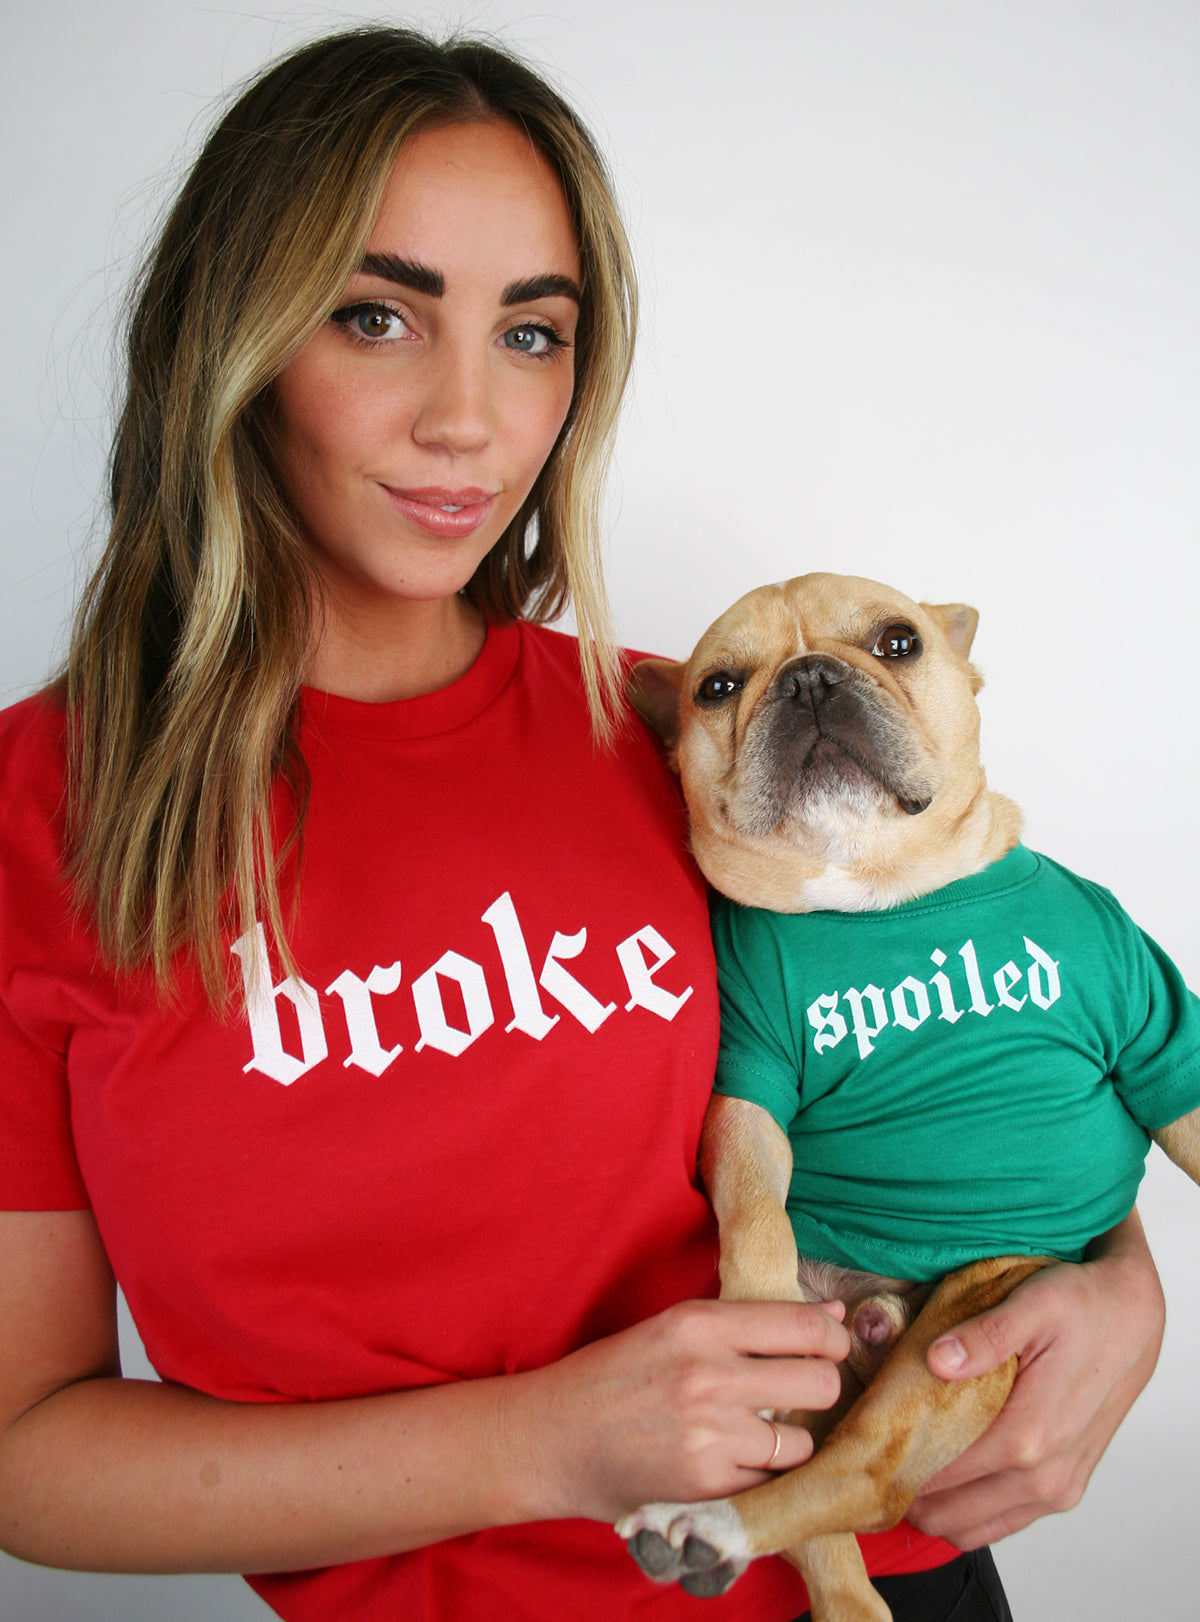 Broke + Spoiled Matching T-Shirt Set